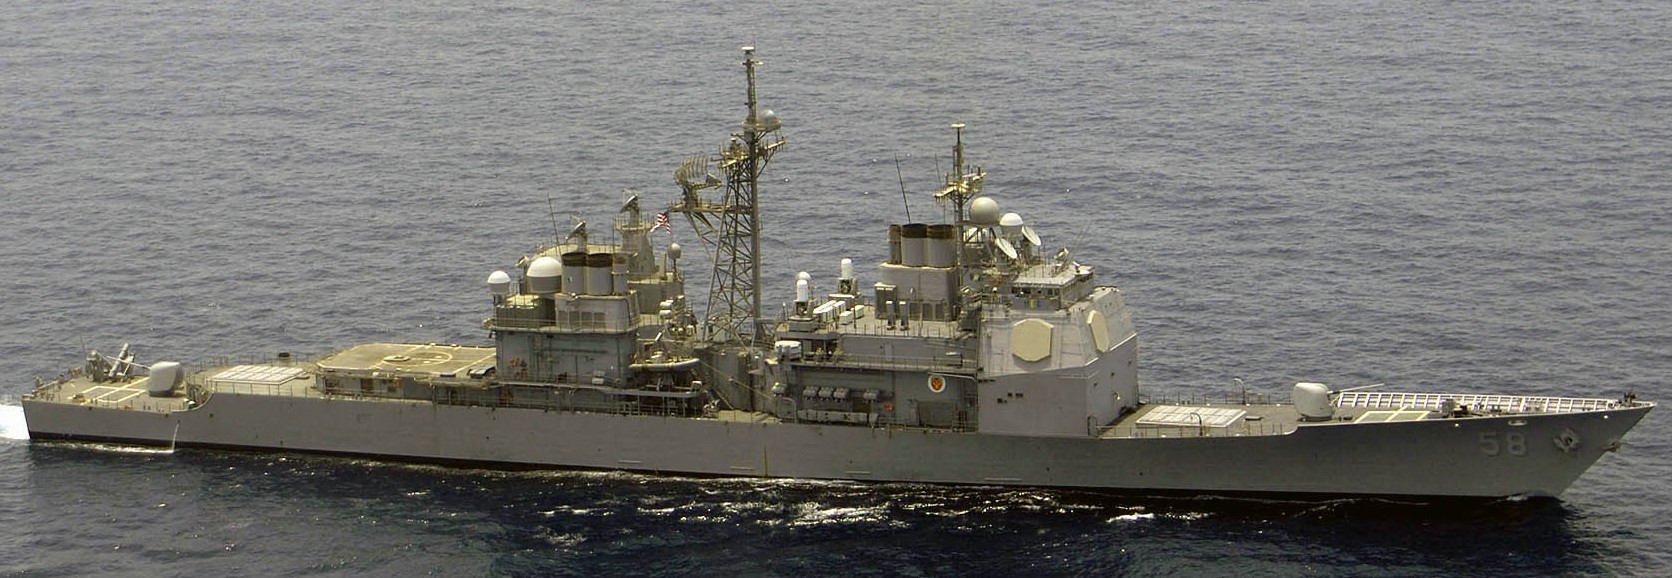 cg-58 uss philippine sea ticonderoga class guided missile cruiser aegis us navy 13